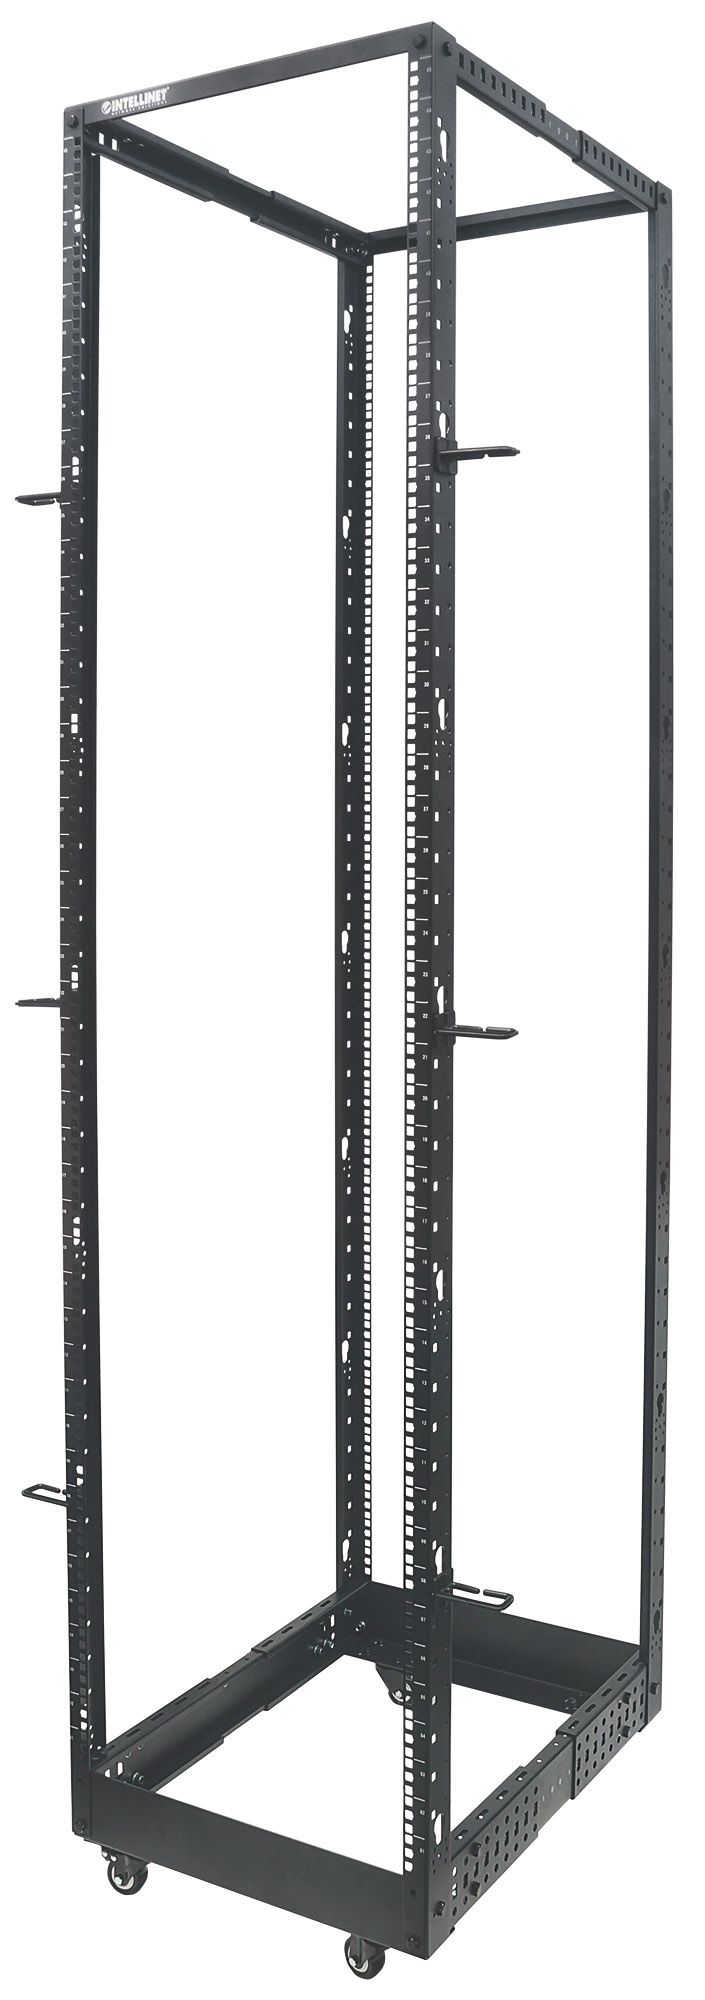 19" Rahmen zweiteilig         45 HE, B x T 515 / 559-1023 mm